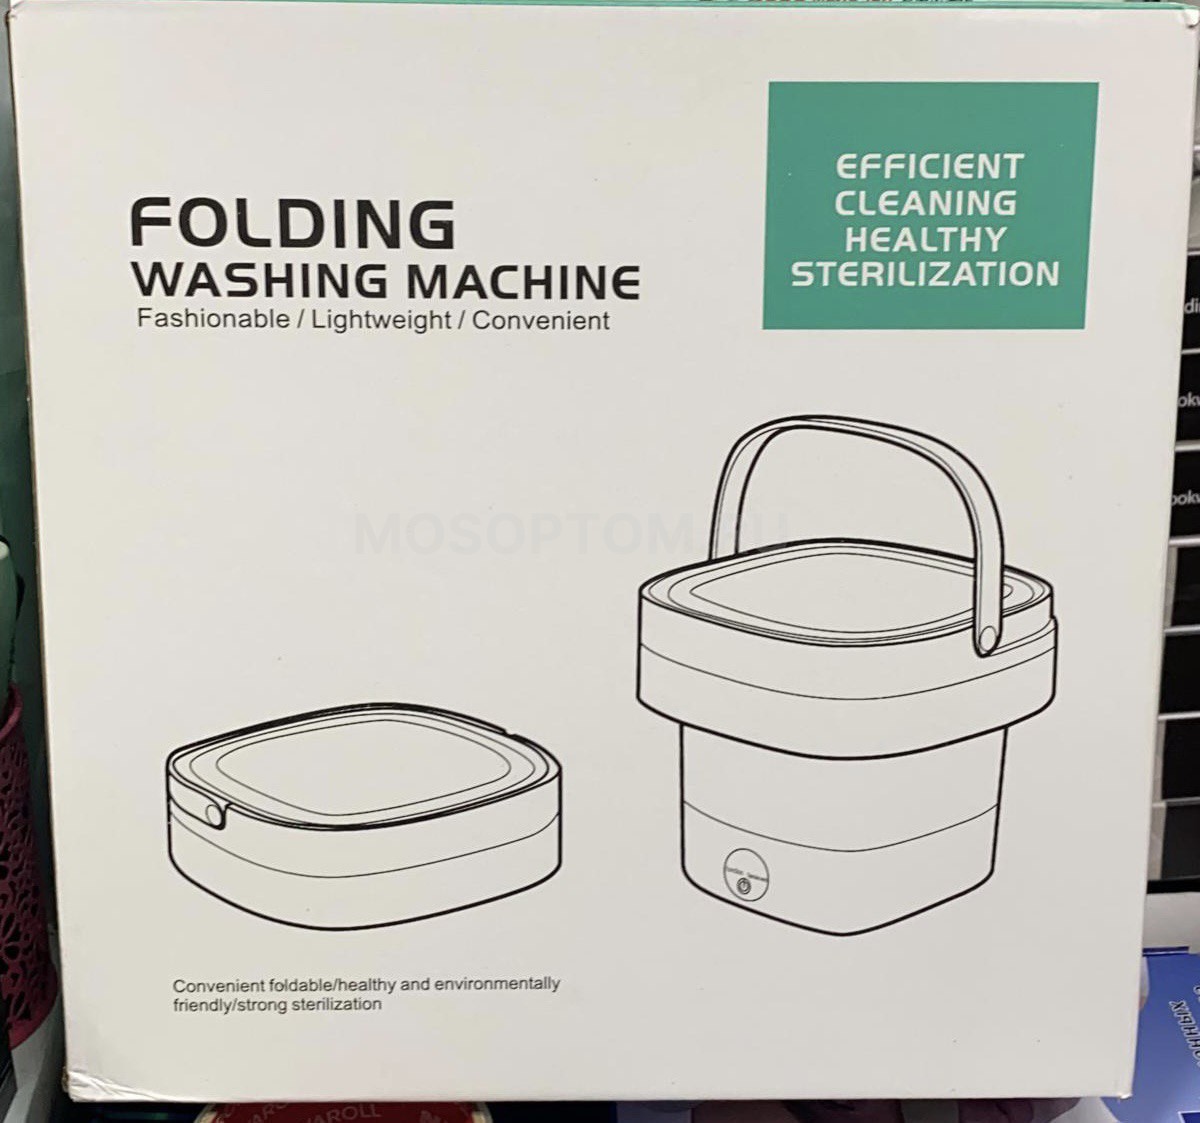 Мини стиральная машинка Folding Washing Machine Efficient Cleaning Healthy Sterilization оптом - Фото №3